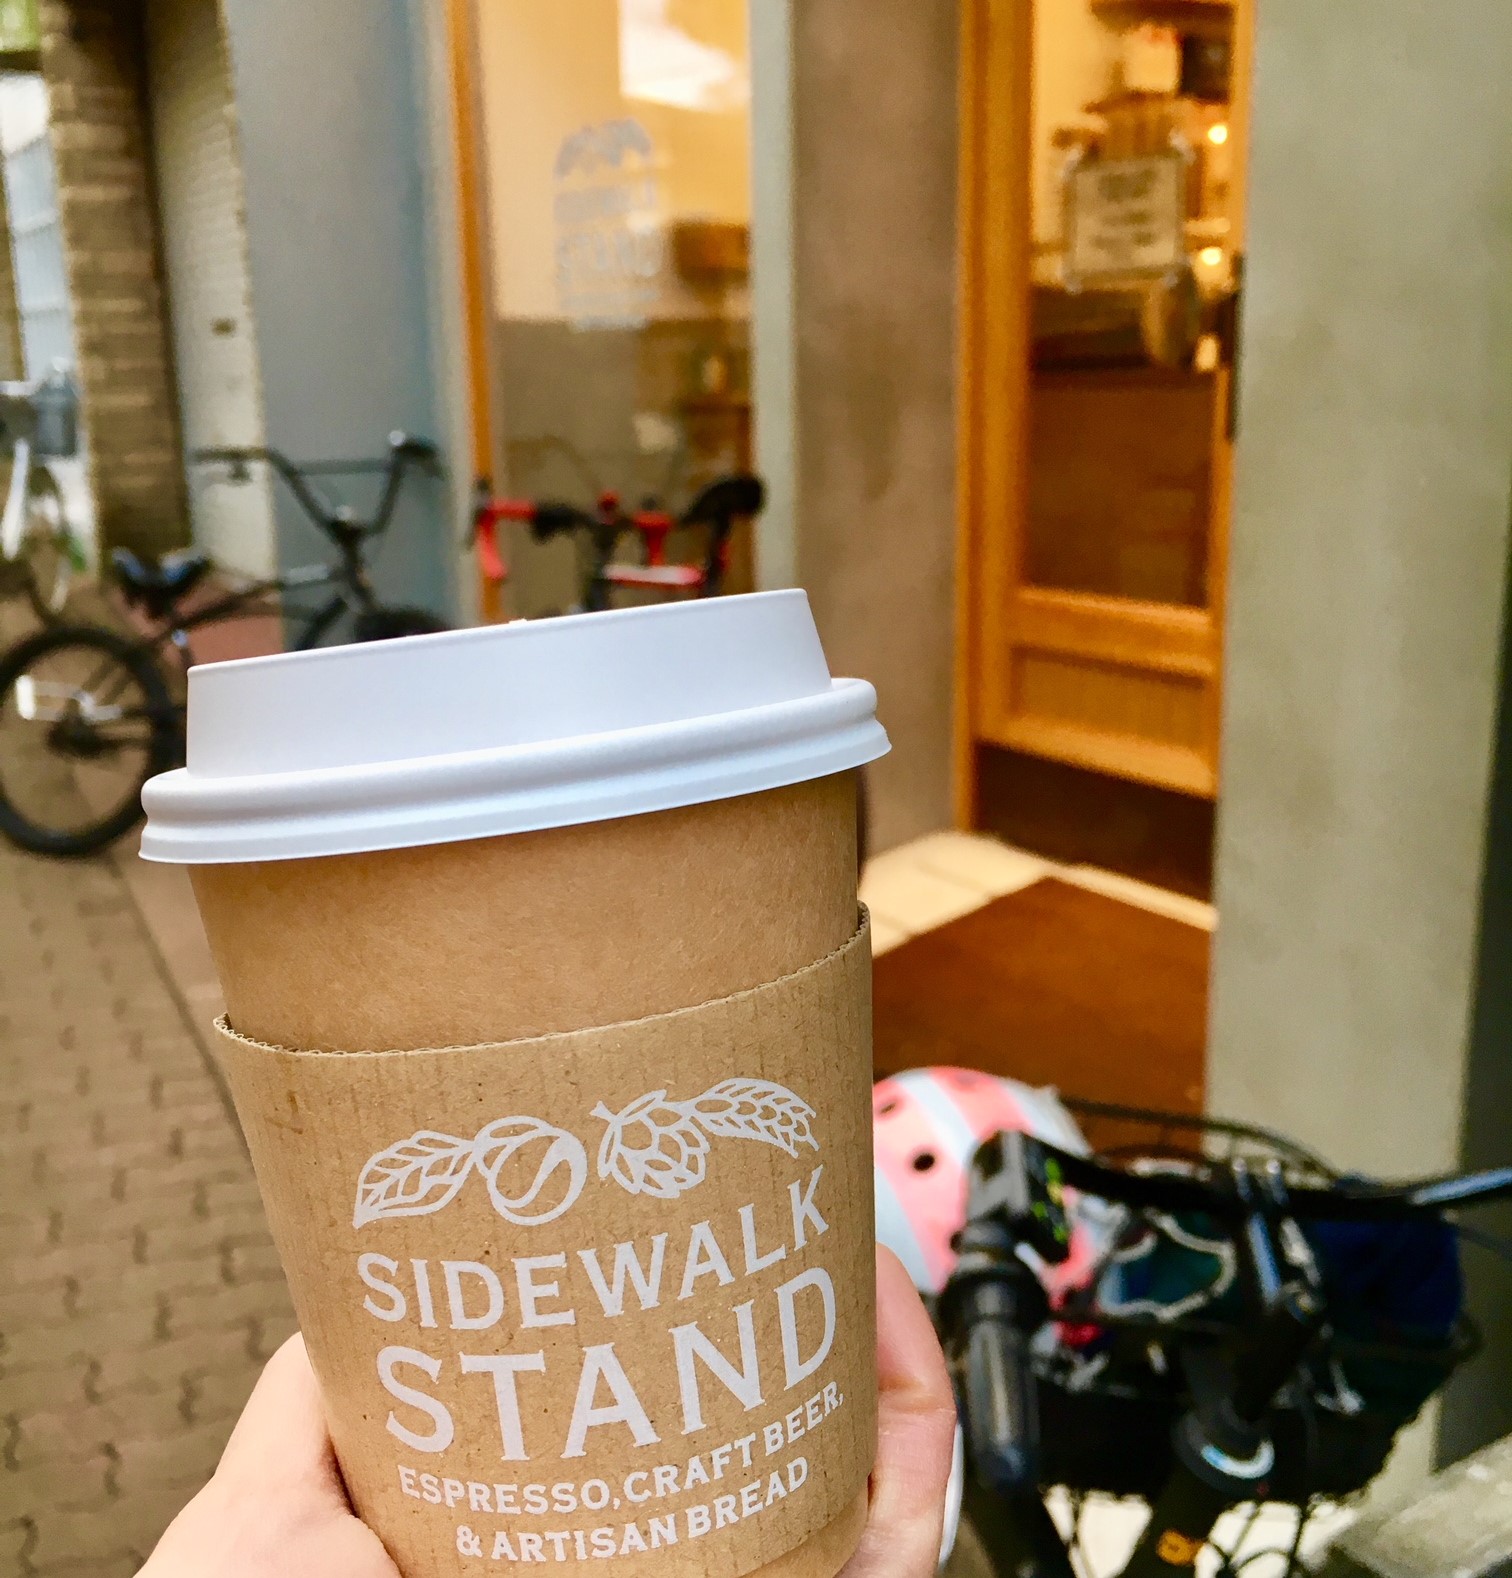 SIDEWALK STAND INOKASHIRAの店舗外観とコーヒーの画像